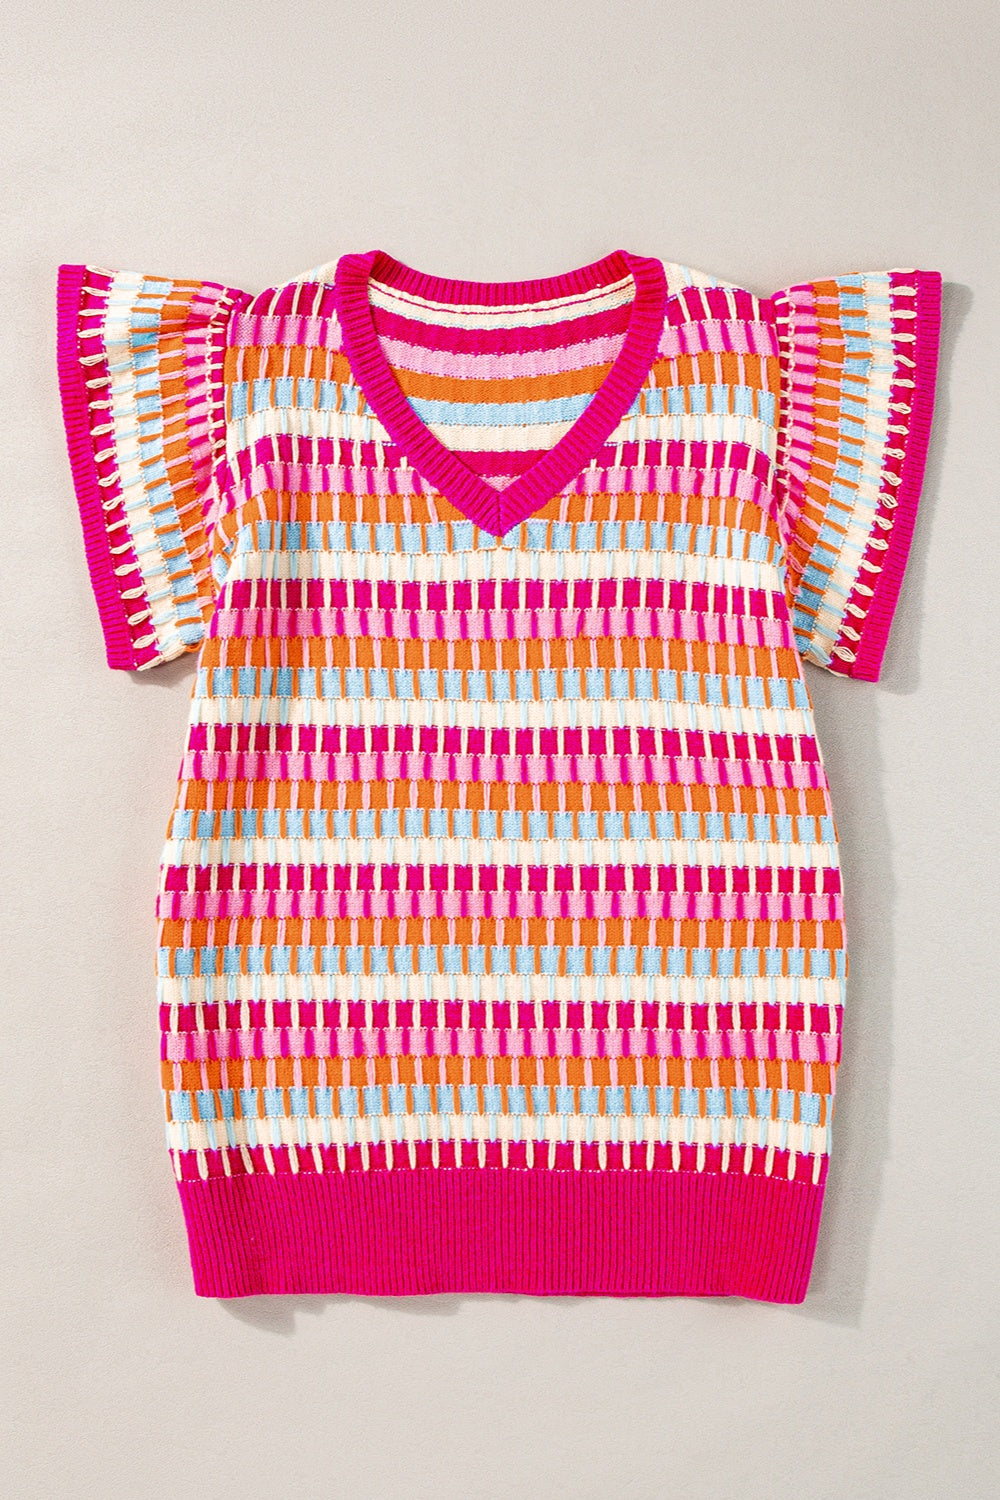 TEEK - V-Neck Cap Sleeve Knit Top TOPS TEEK Trend Hot Pink S 